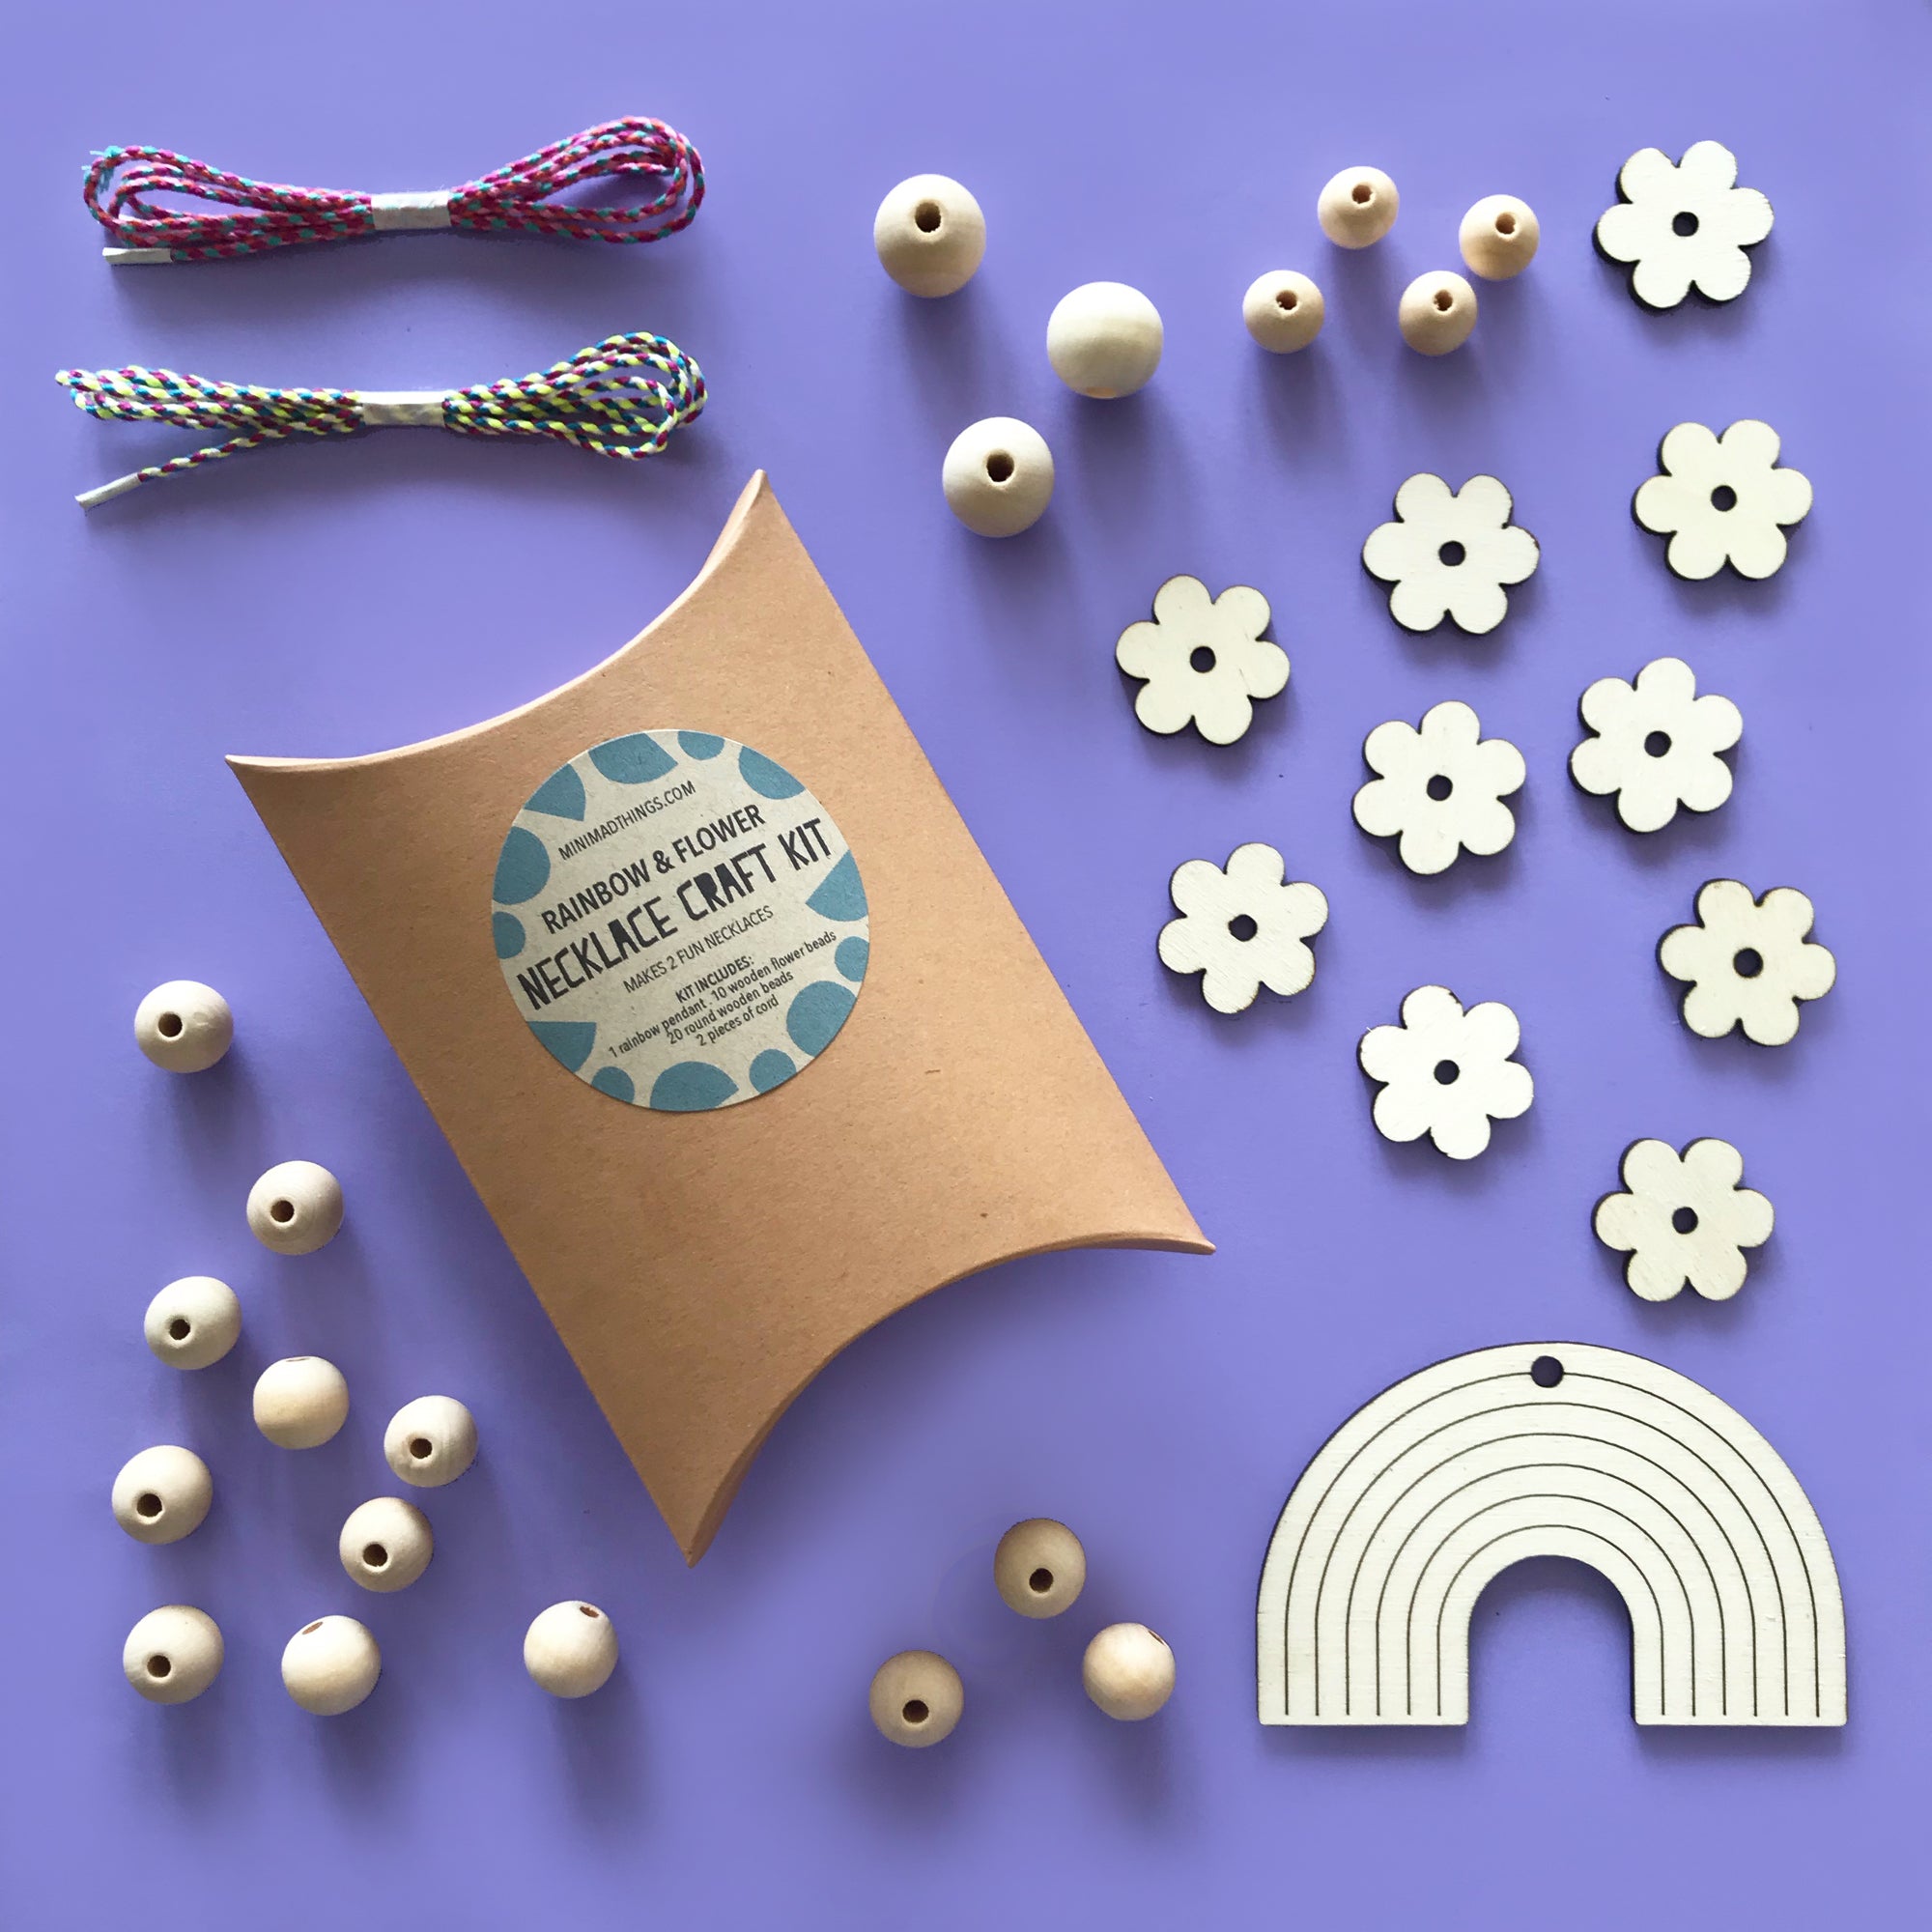 Necklace Craft Kit - Rainbow & Flowers - 25% OFF